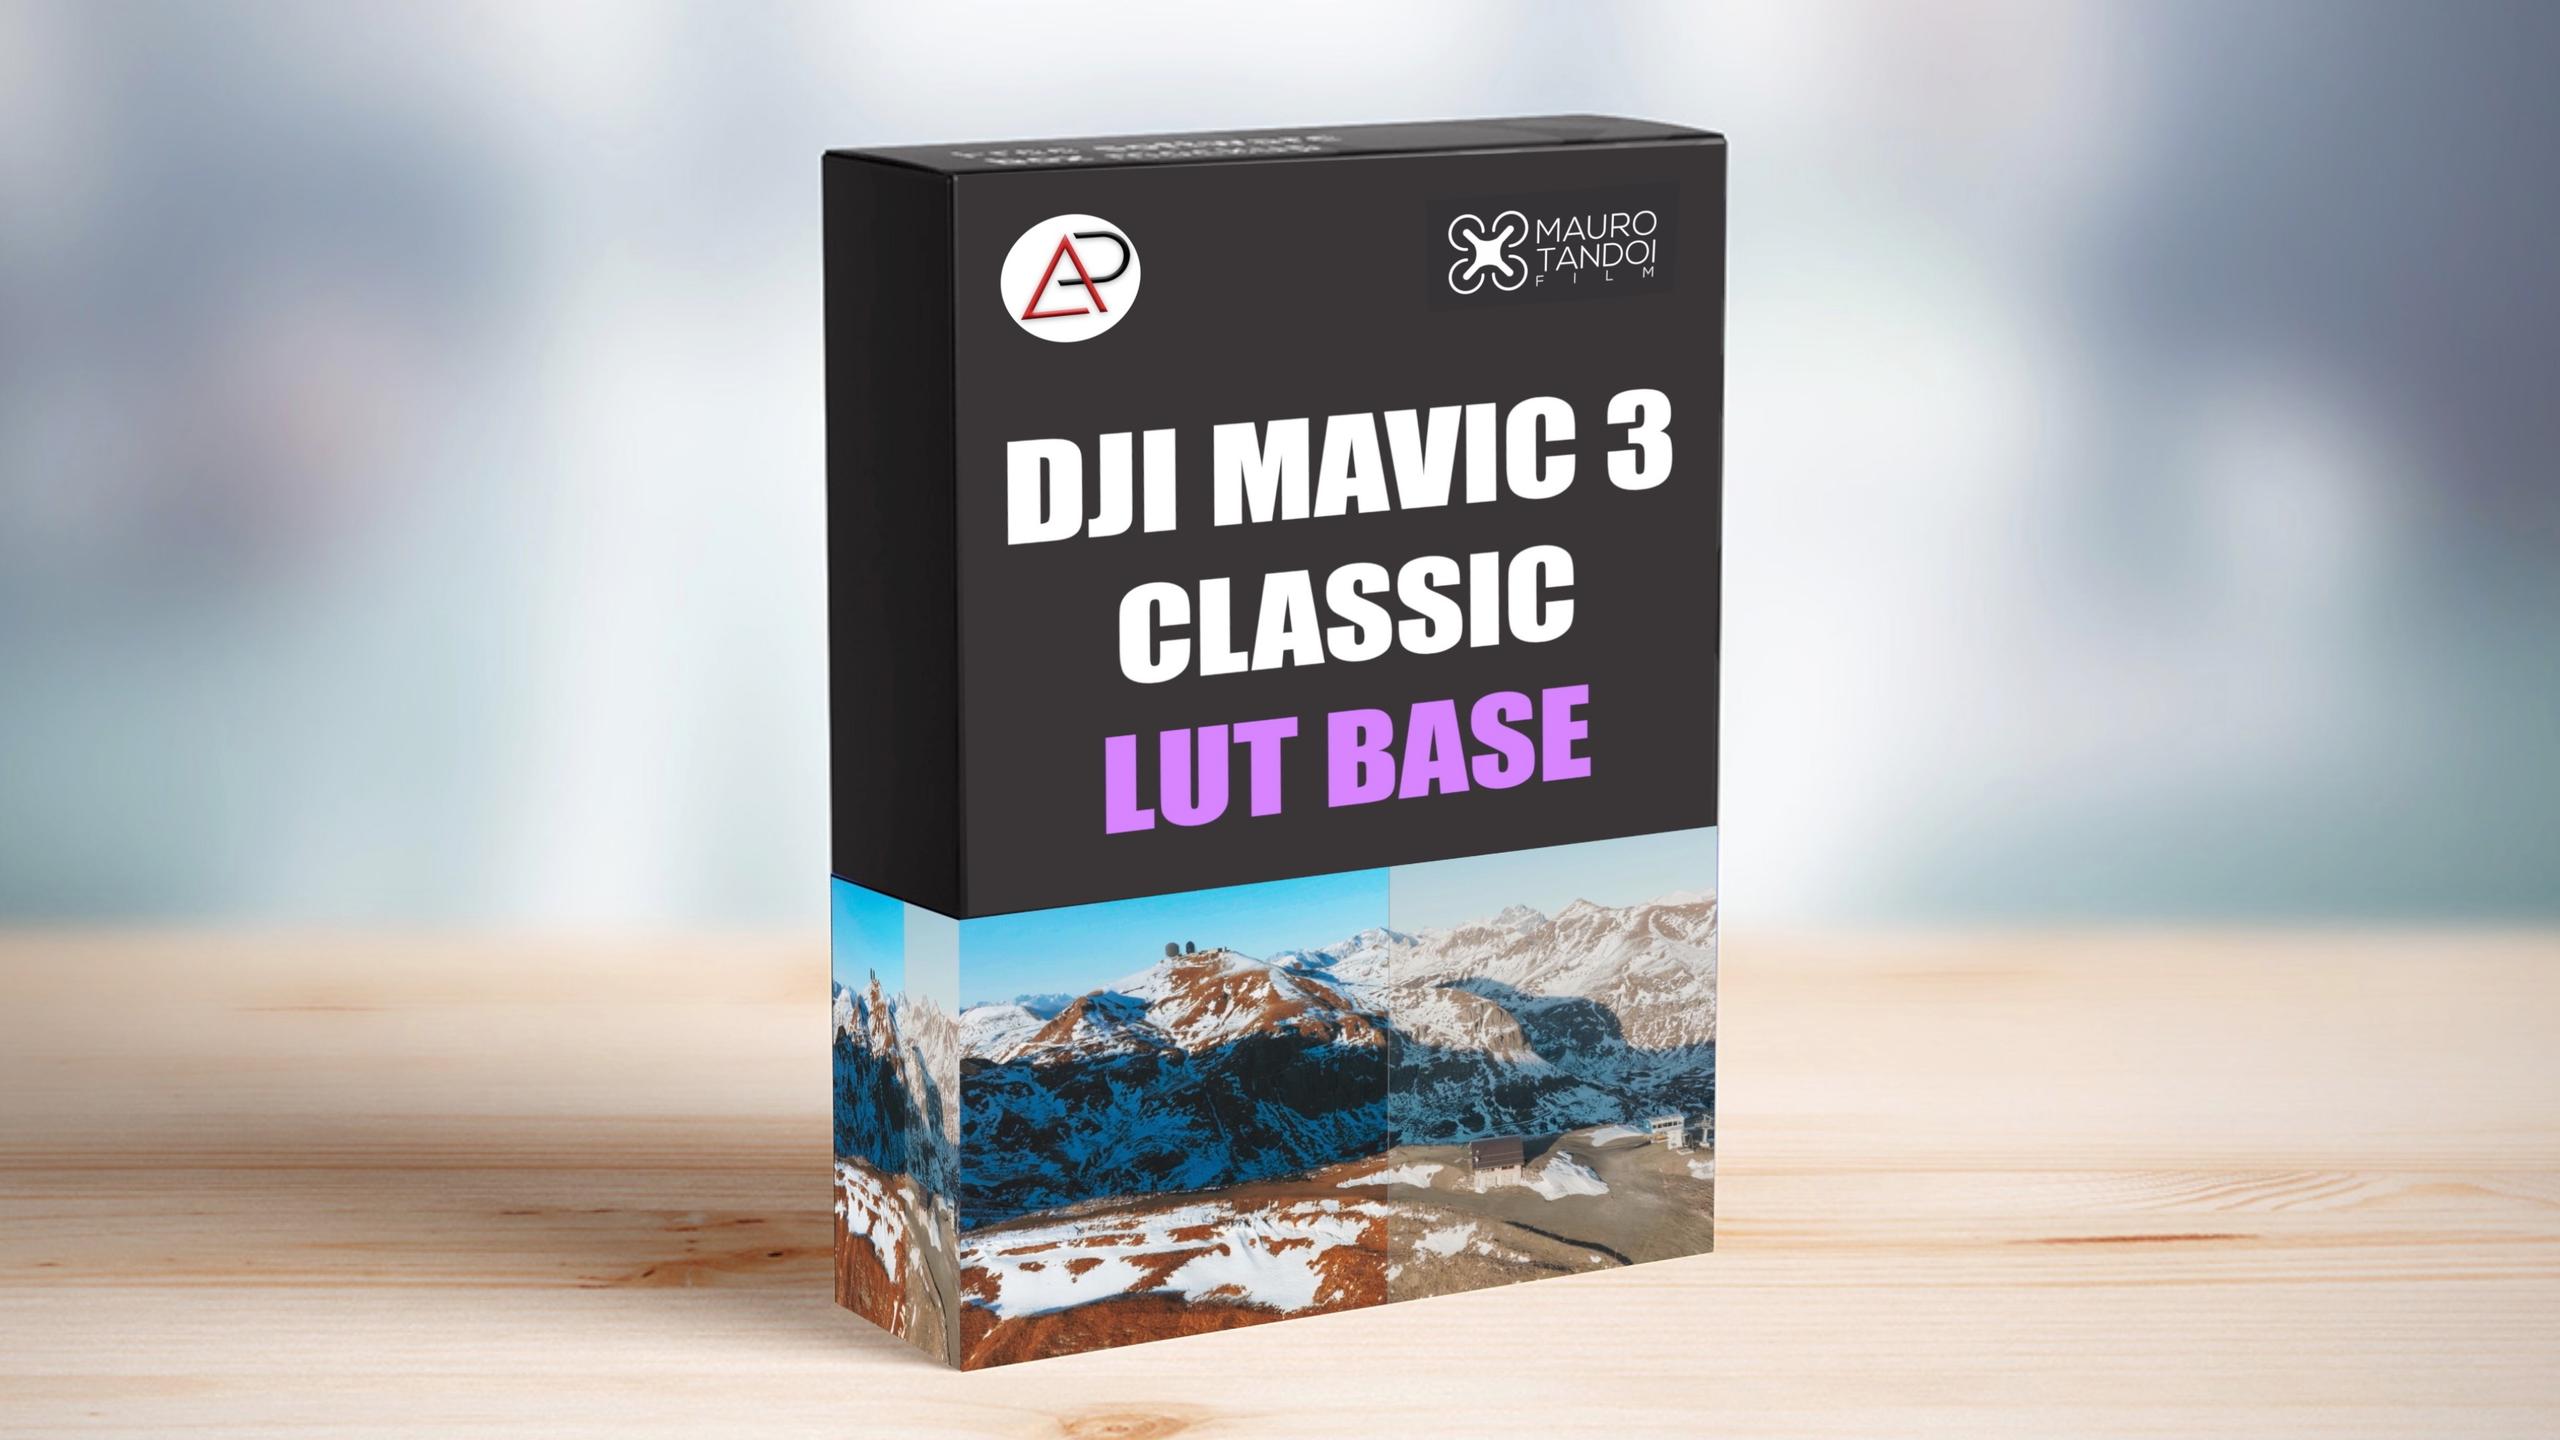 DJI MAVIC 3 CLASSIC LUT BASE